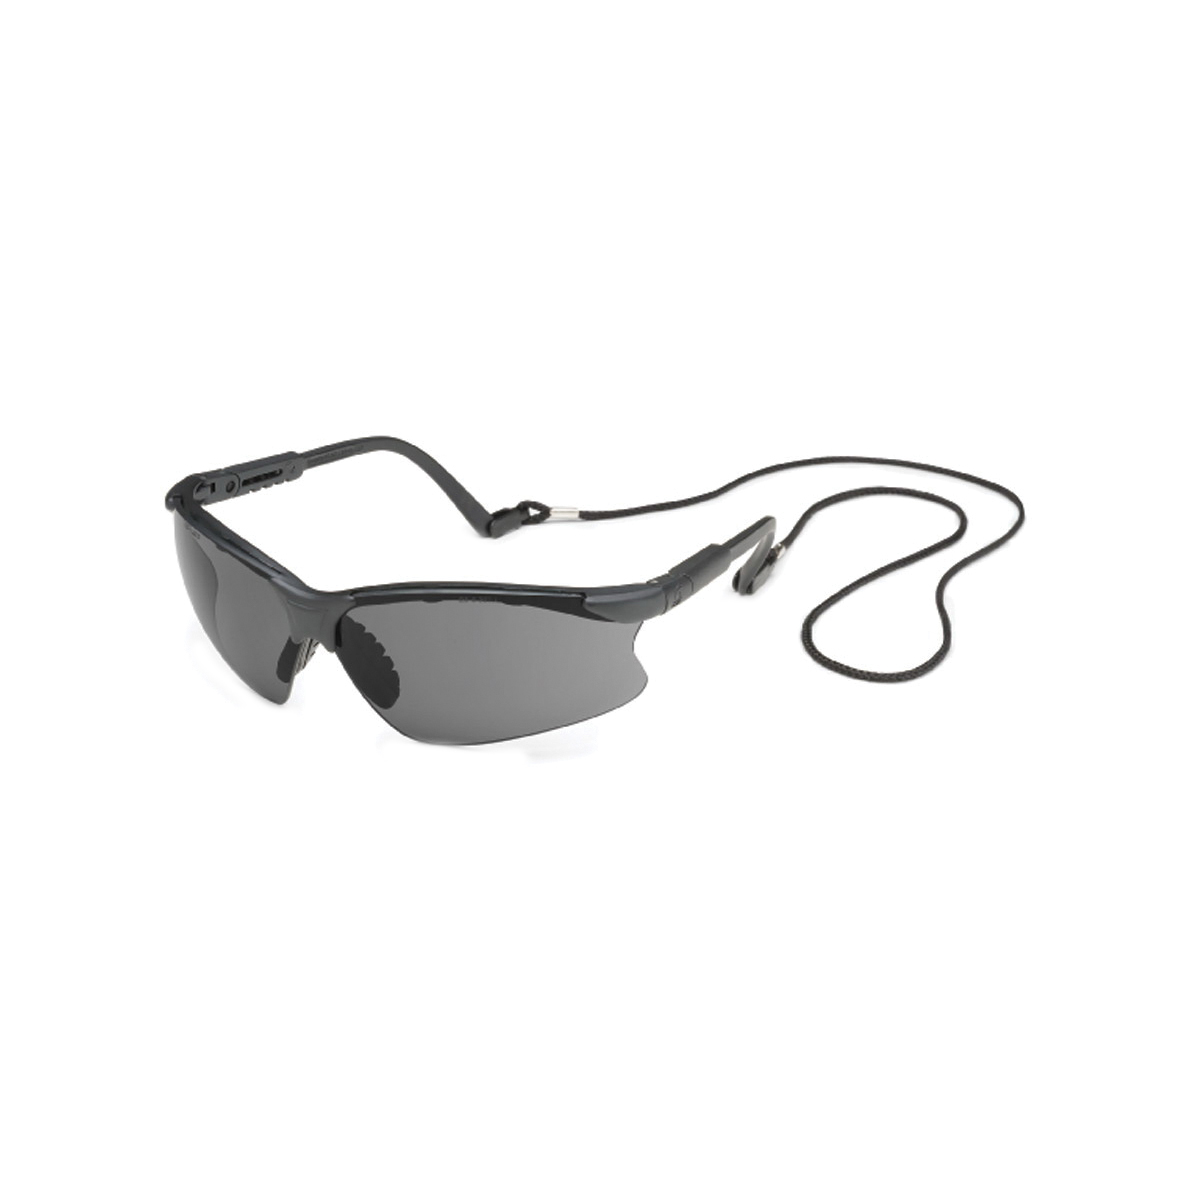 Gateway Safety® Scorpion® 16GB83 Safety Glasses, Unisex, Gray Lens, Scratch-Resistant Lens, Black Frame, Ratchet Temple